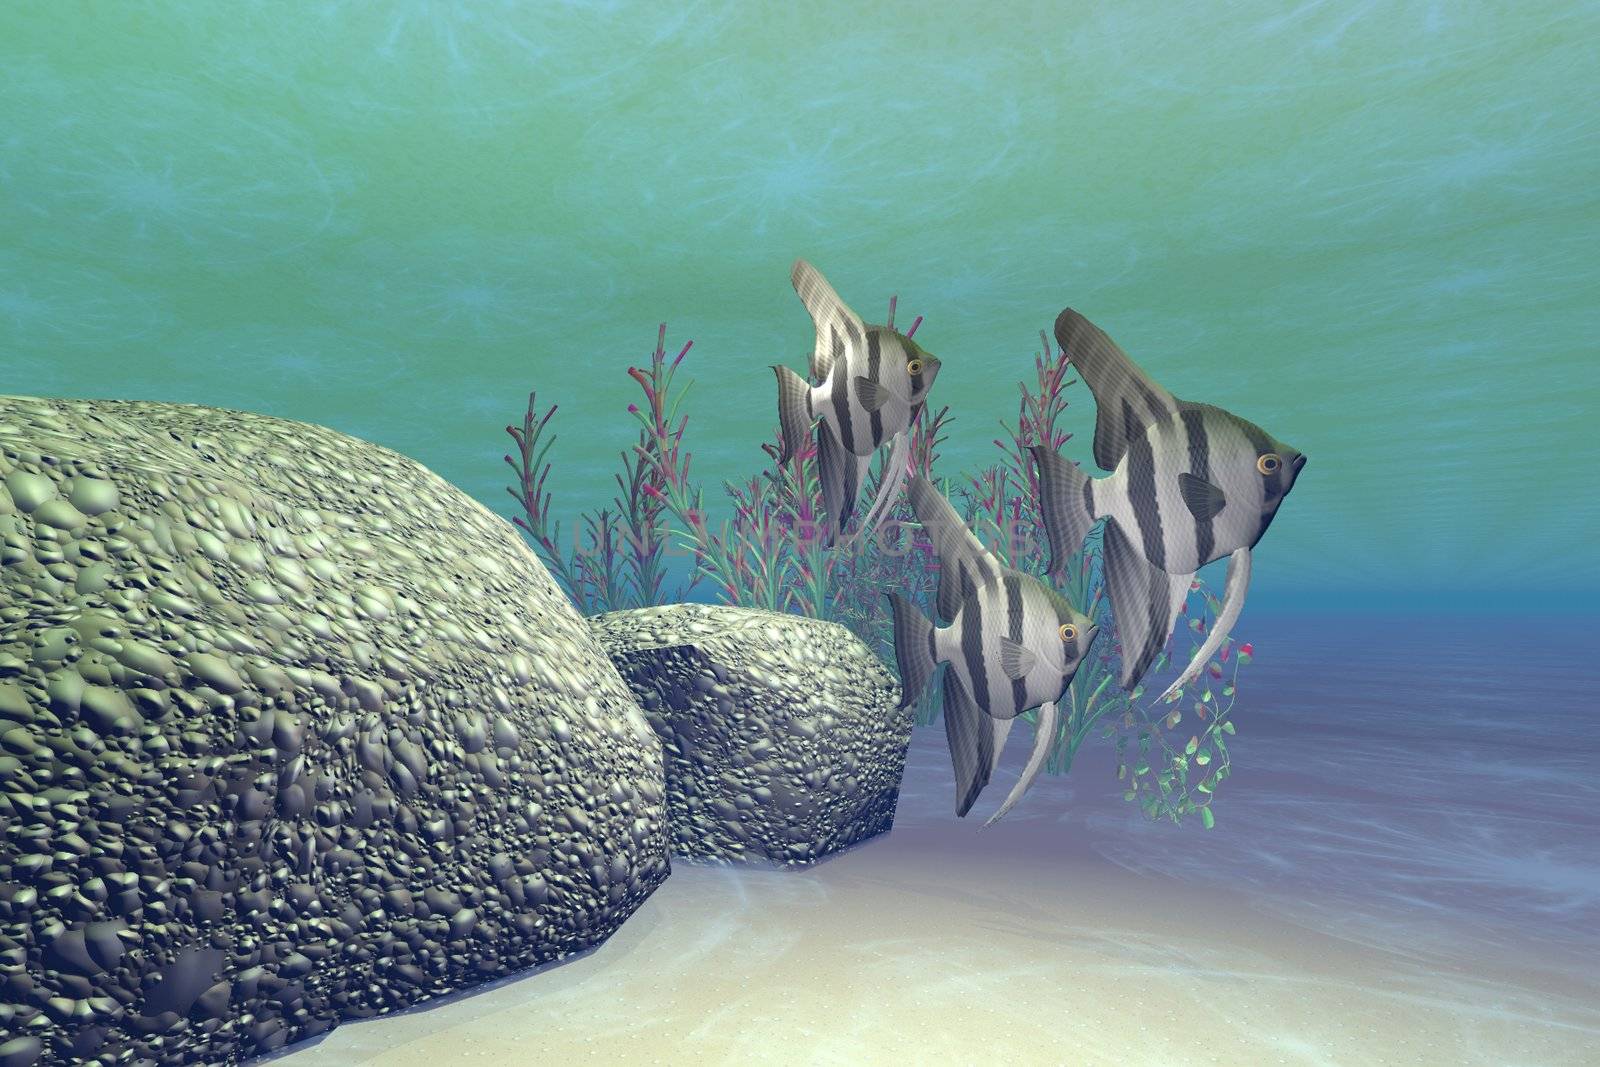 A groupl of angelfish swim near a reef.